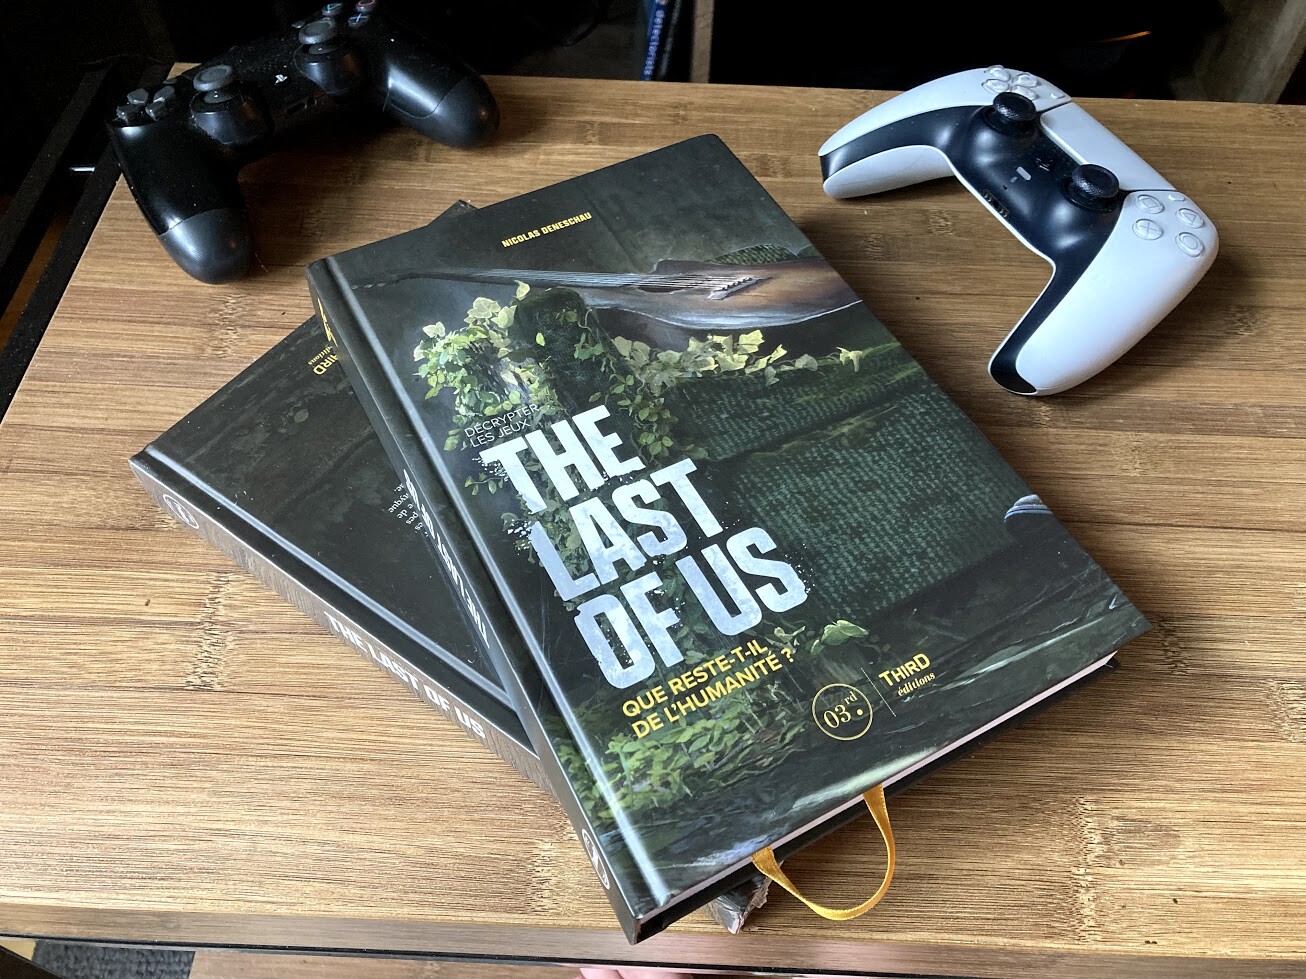 ArtStation - The Last Of Us Part 2 main menu - fanart